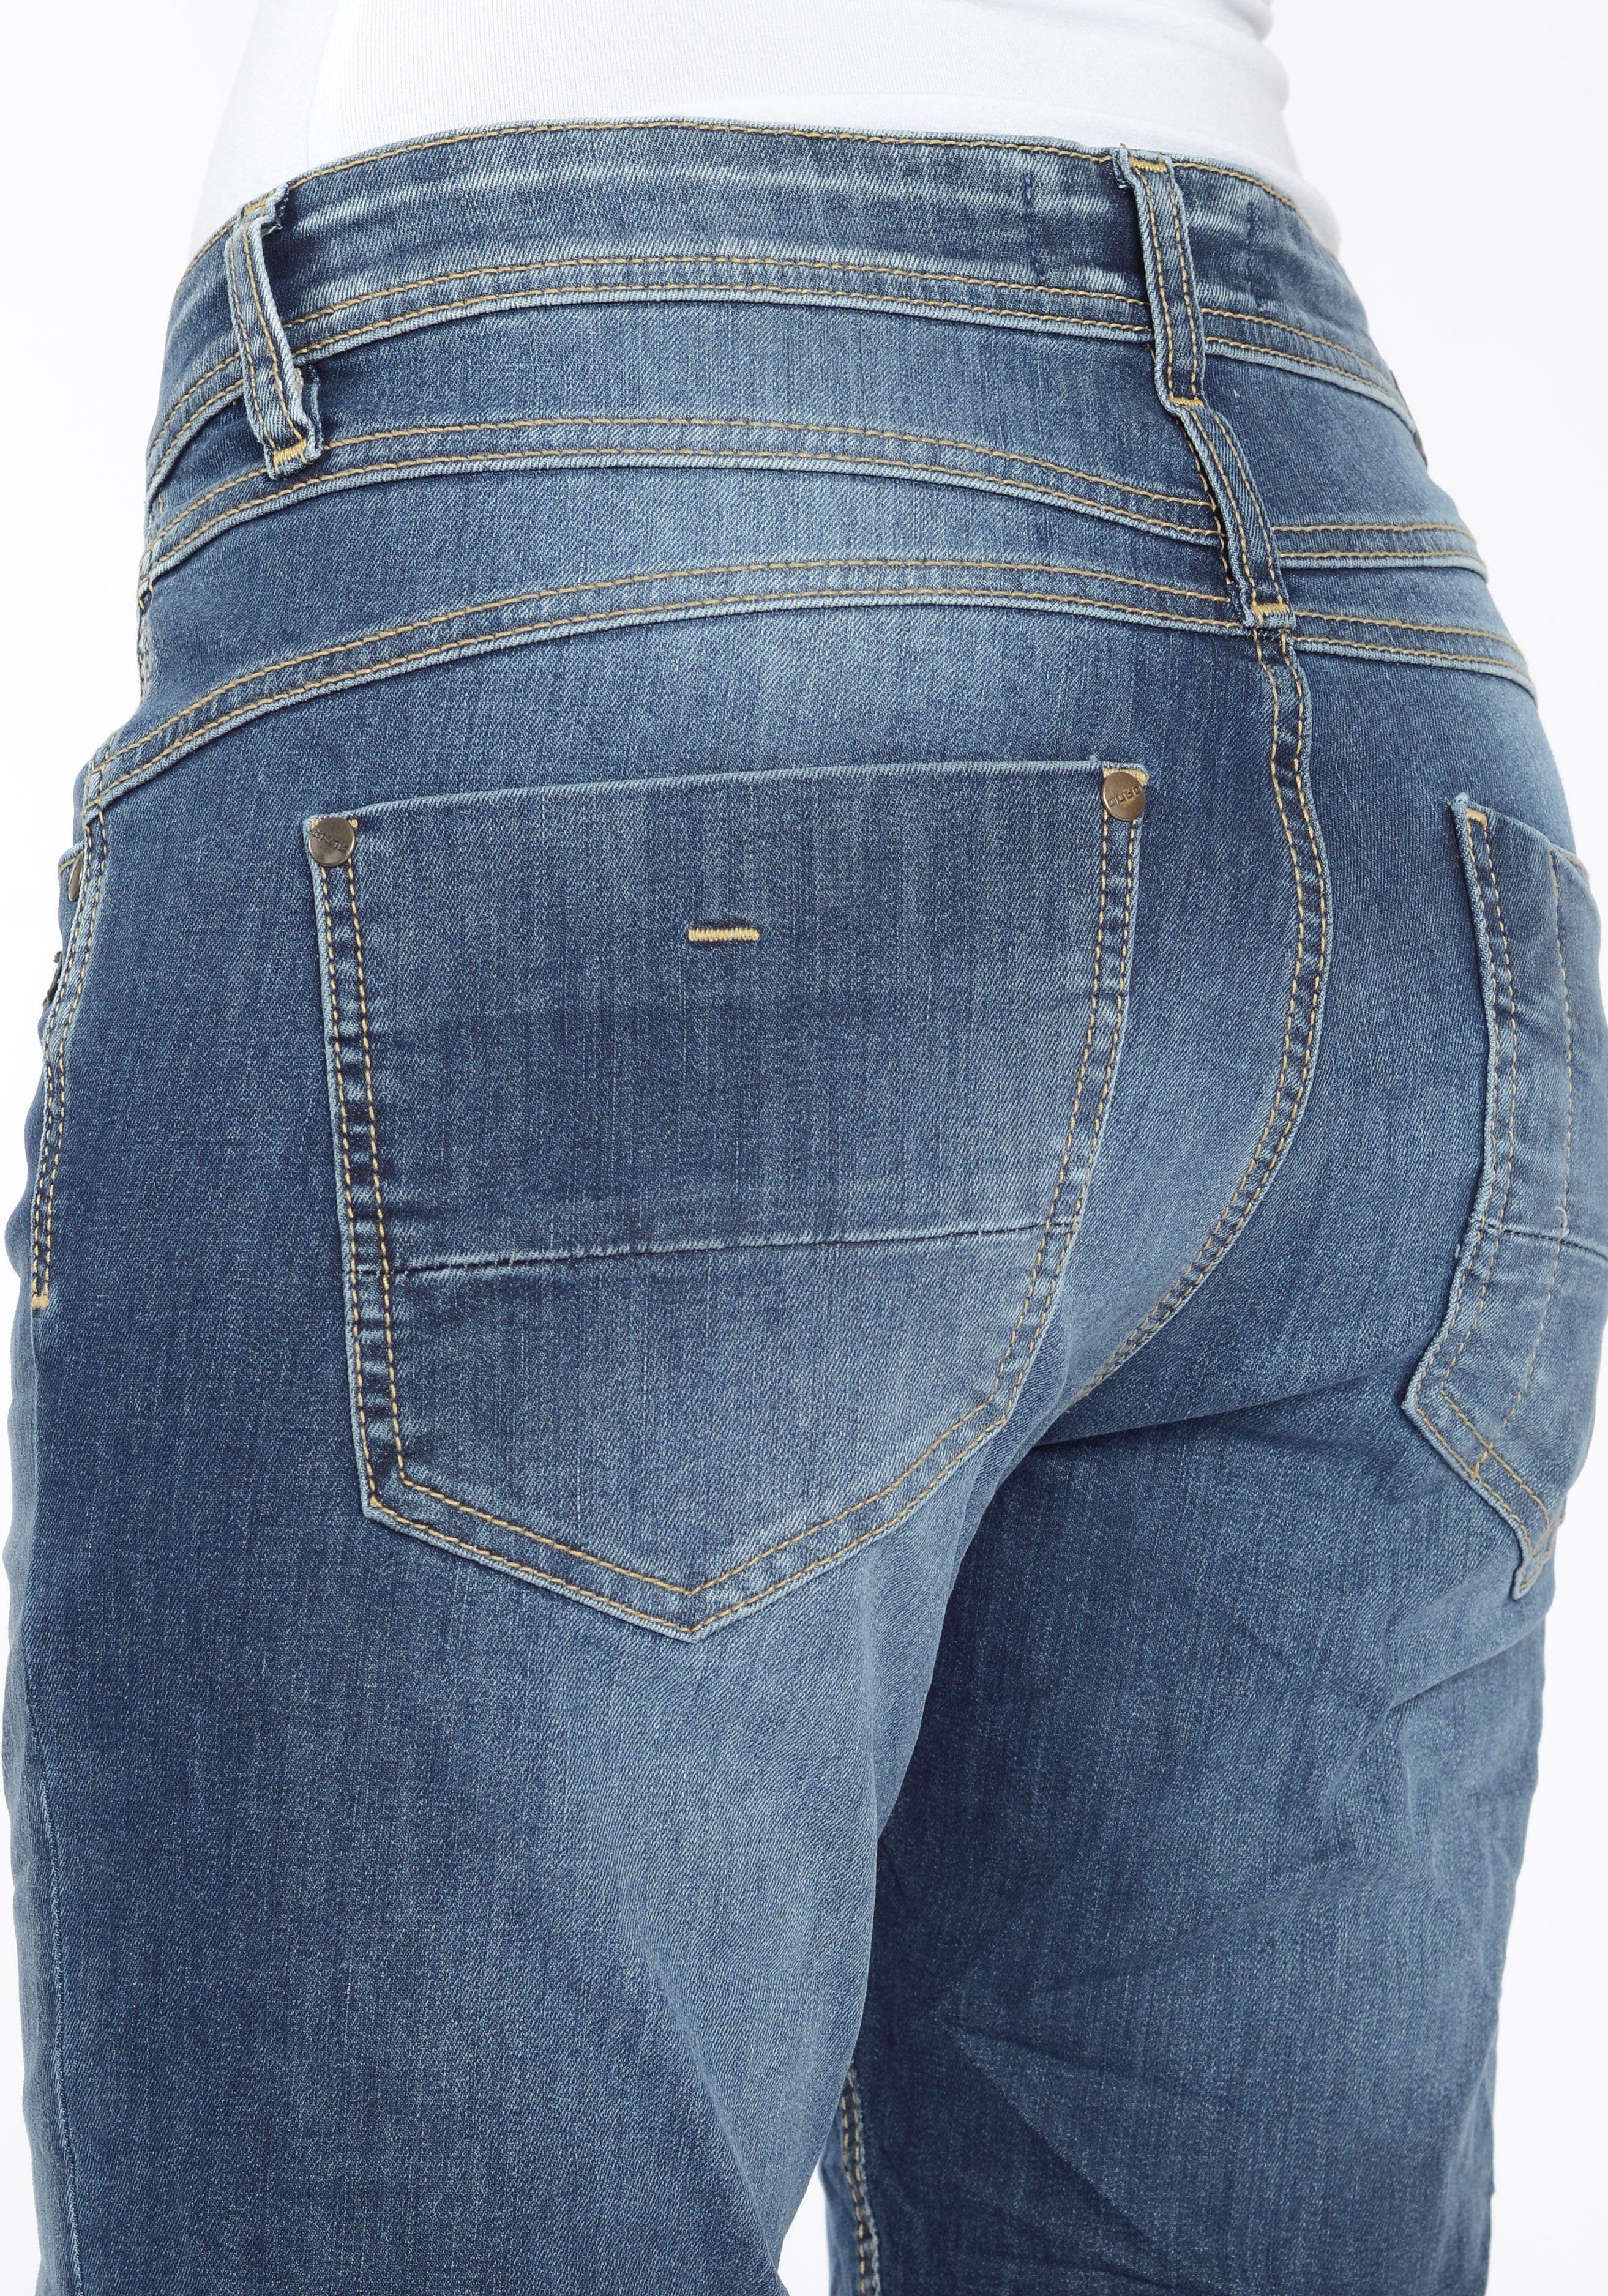 Relax-fit-Jeans perfekter GANG denim (mid Elasthan-Anteil Sitz 94AMELIE durch blue) authentic rock